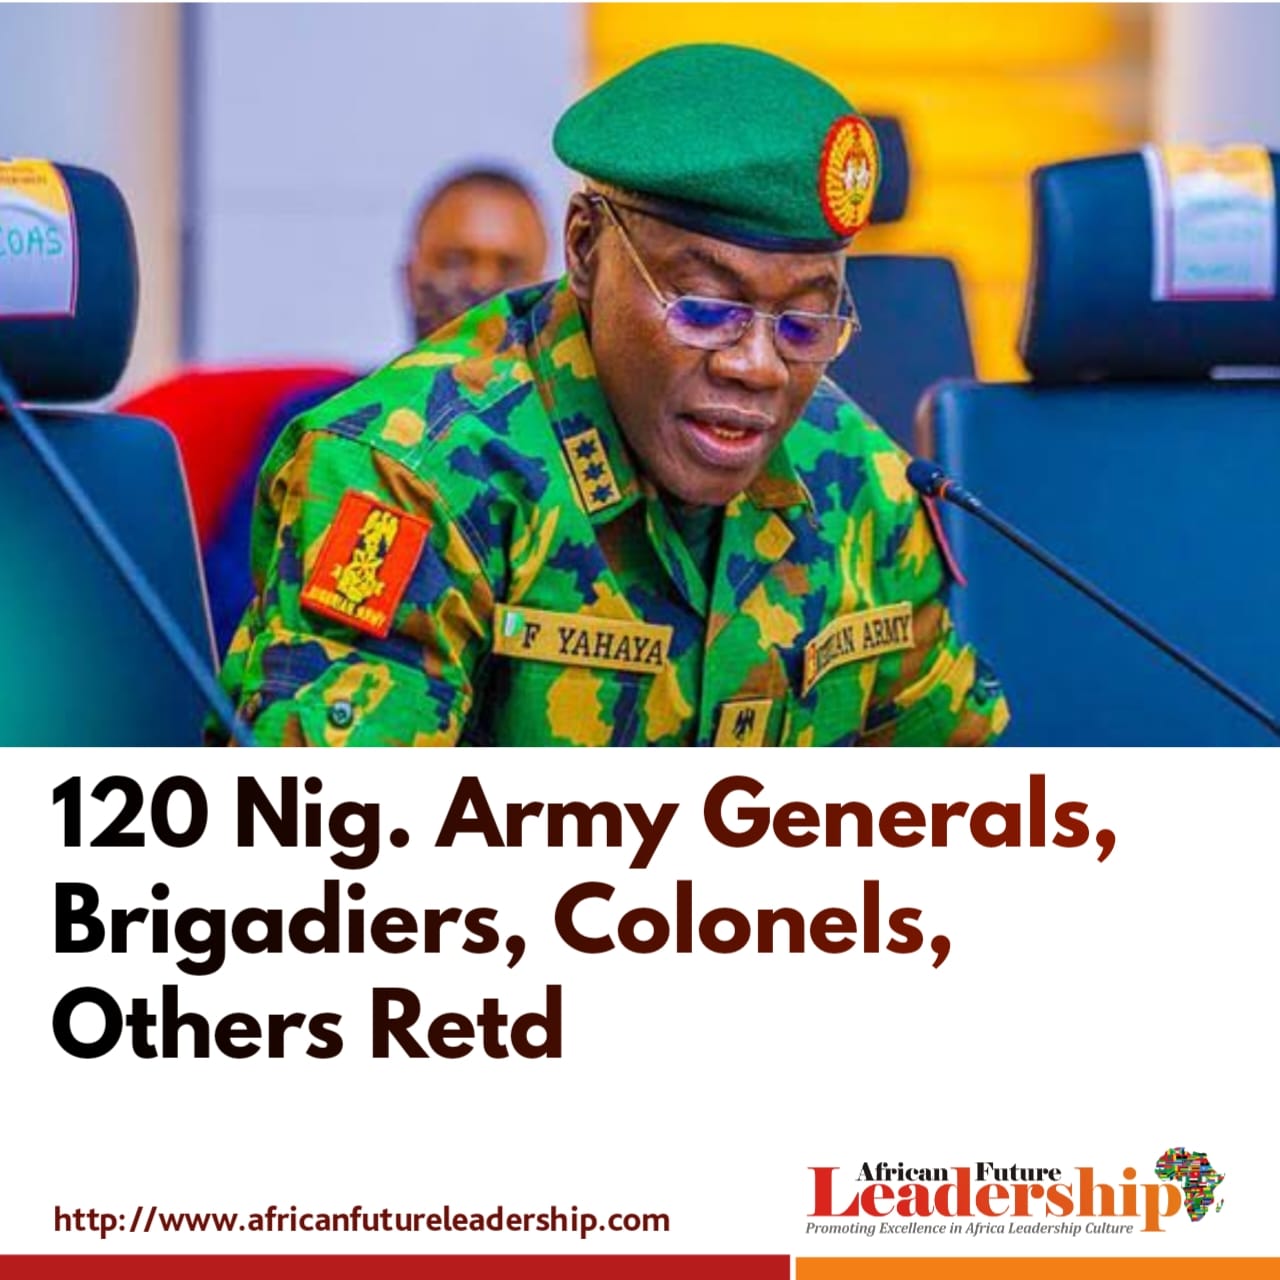 120 Nig. Army Generals, Brigadiers, Colonels, Others Retd